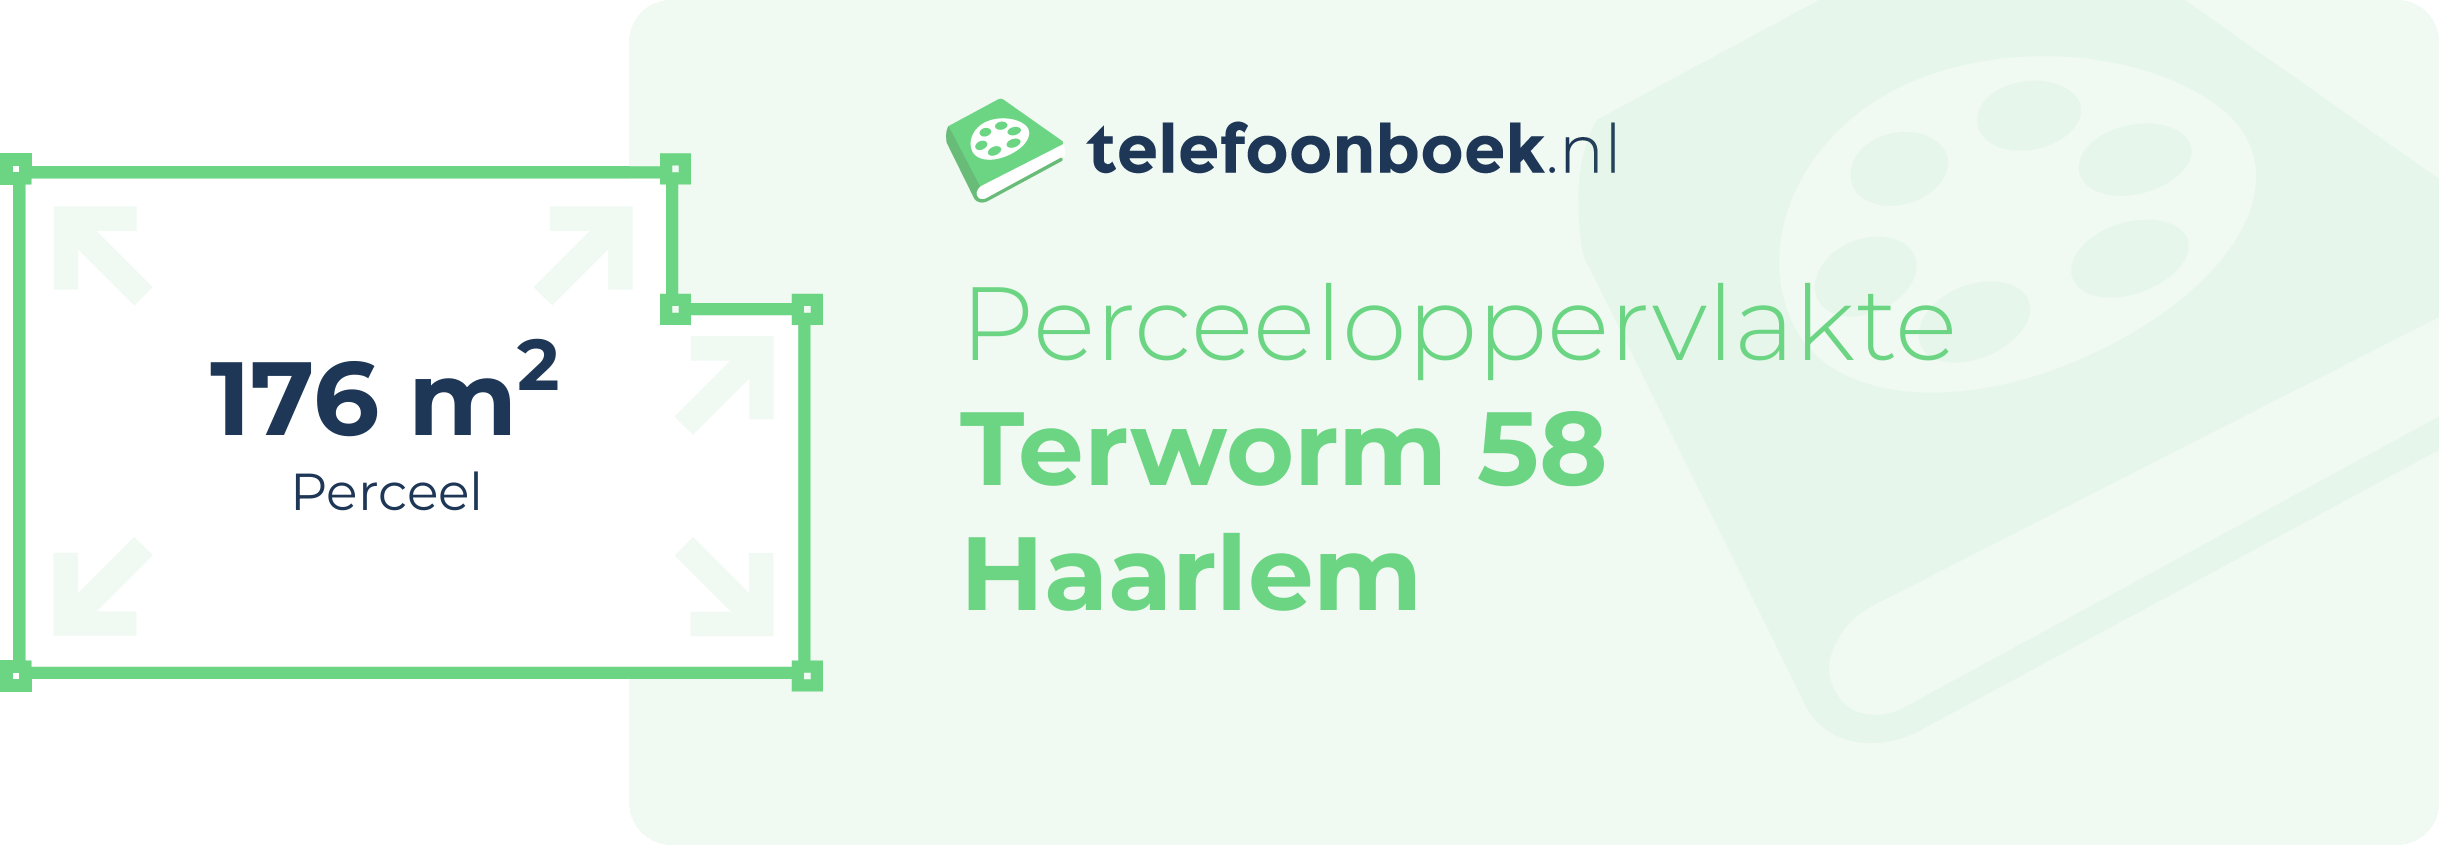 Perceeloppervlakte Terworm 58 Haarlem